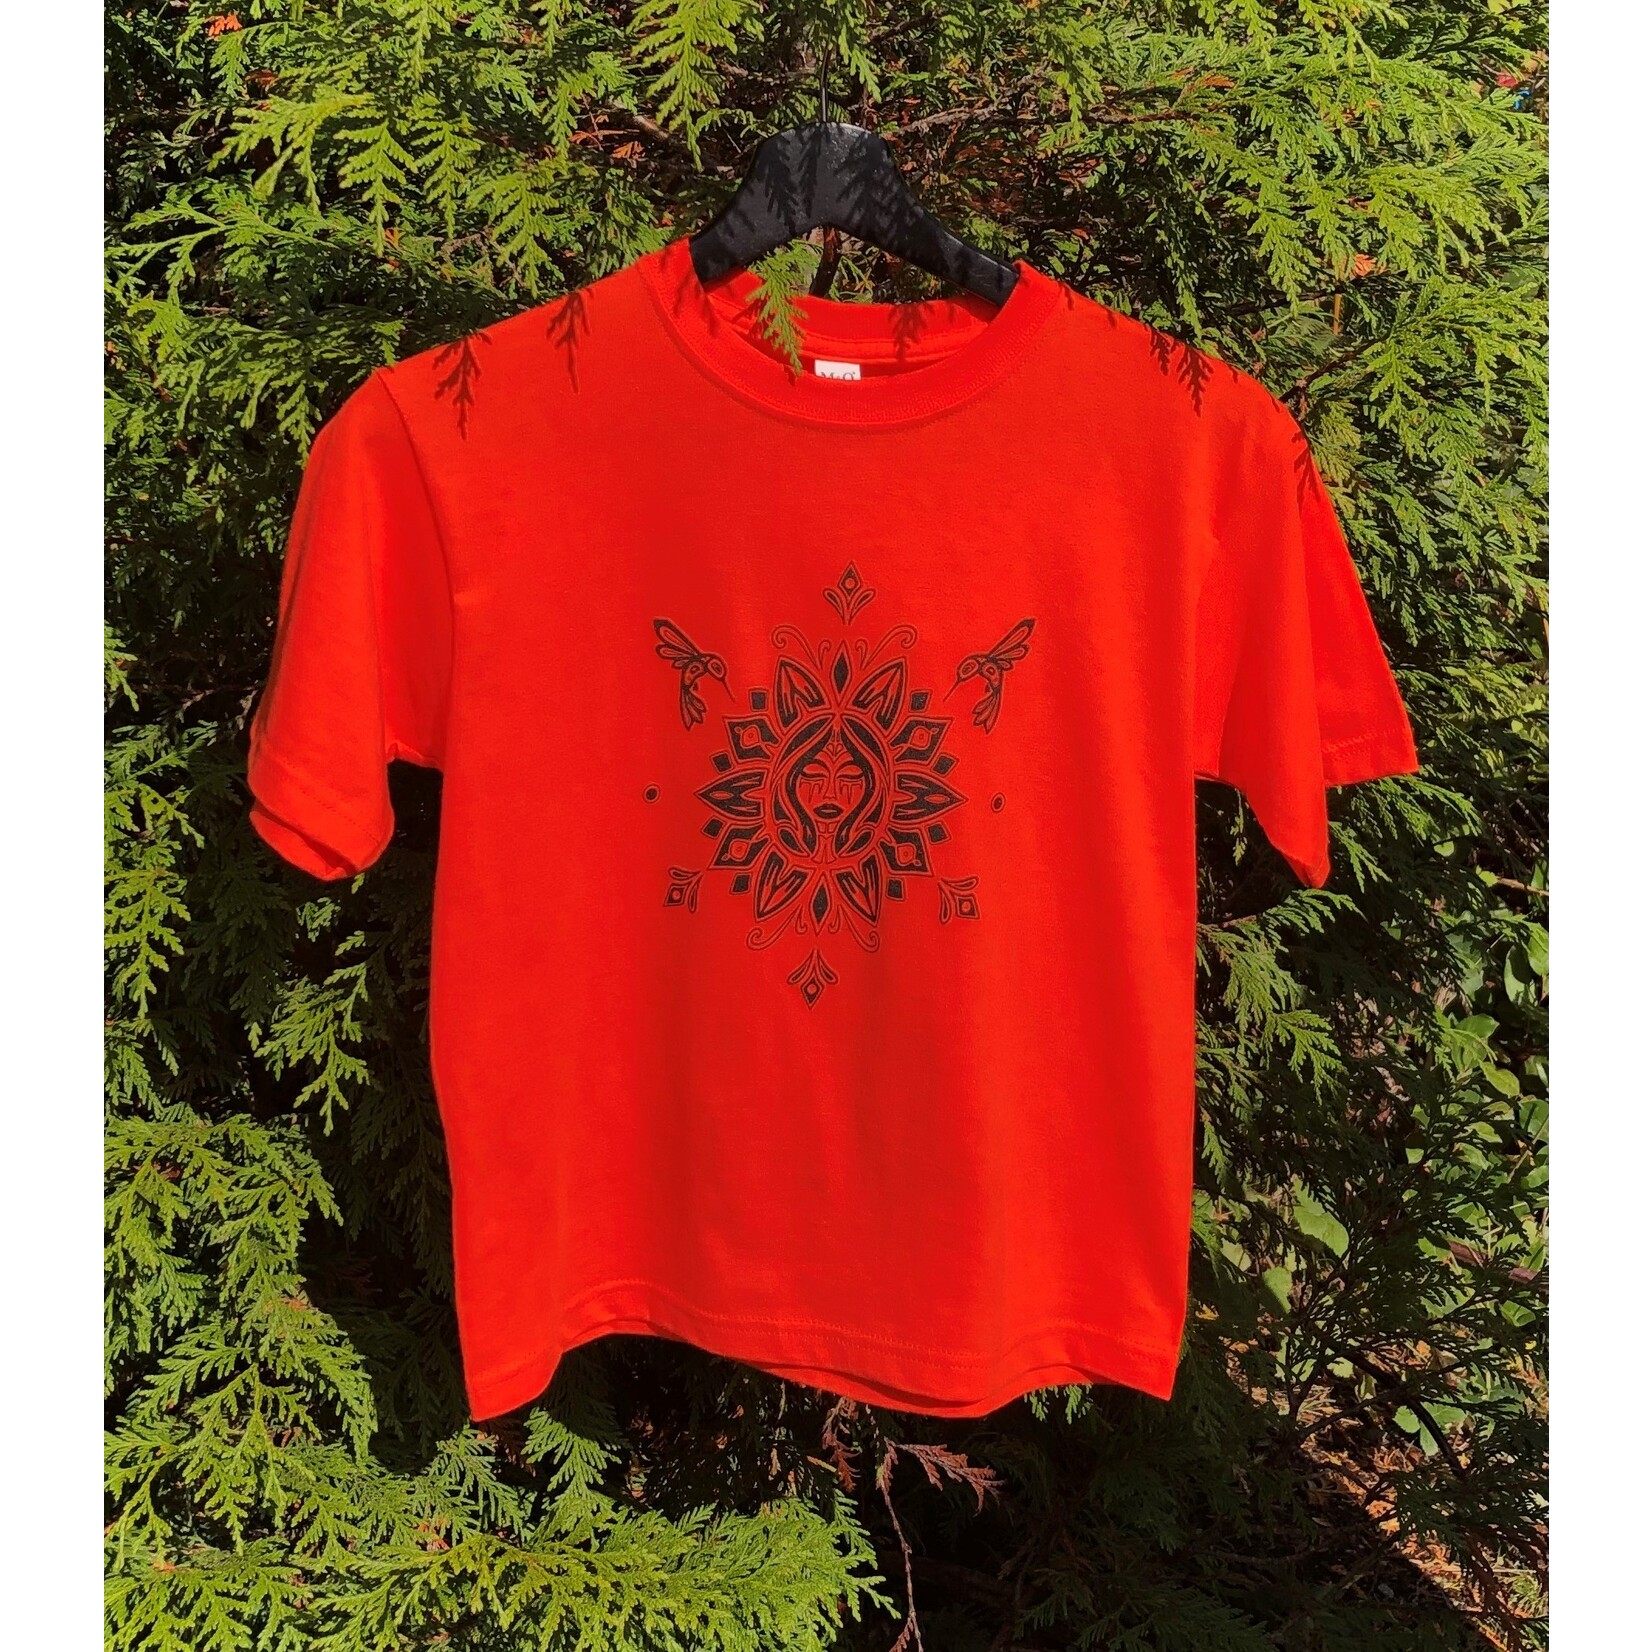 Clayoquot Biosphere Trust Youth Orange T-Shirt Designed by Koyah Morgan-Banke